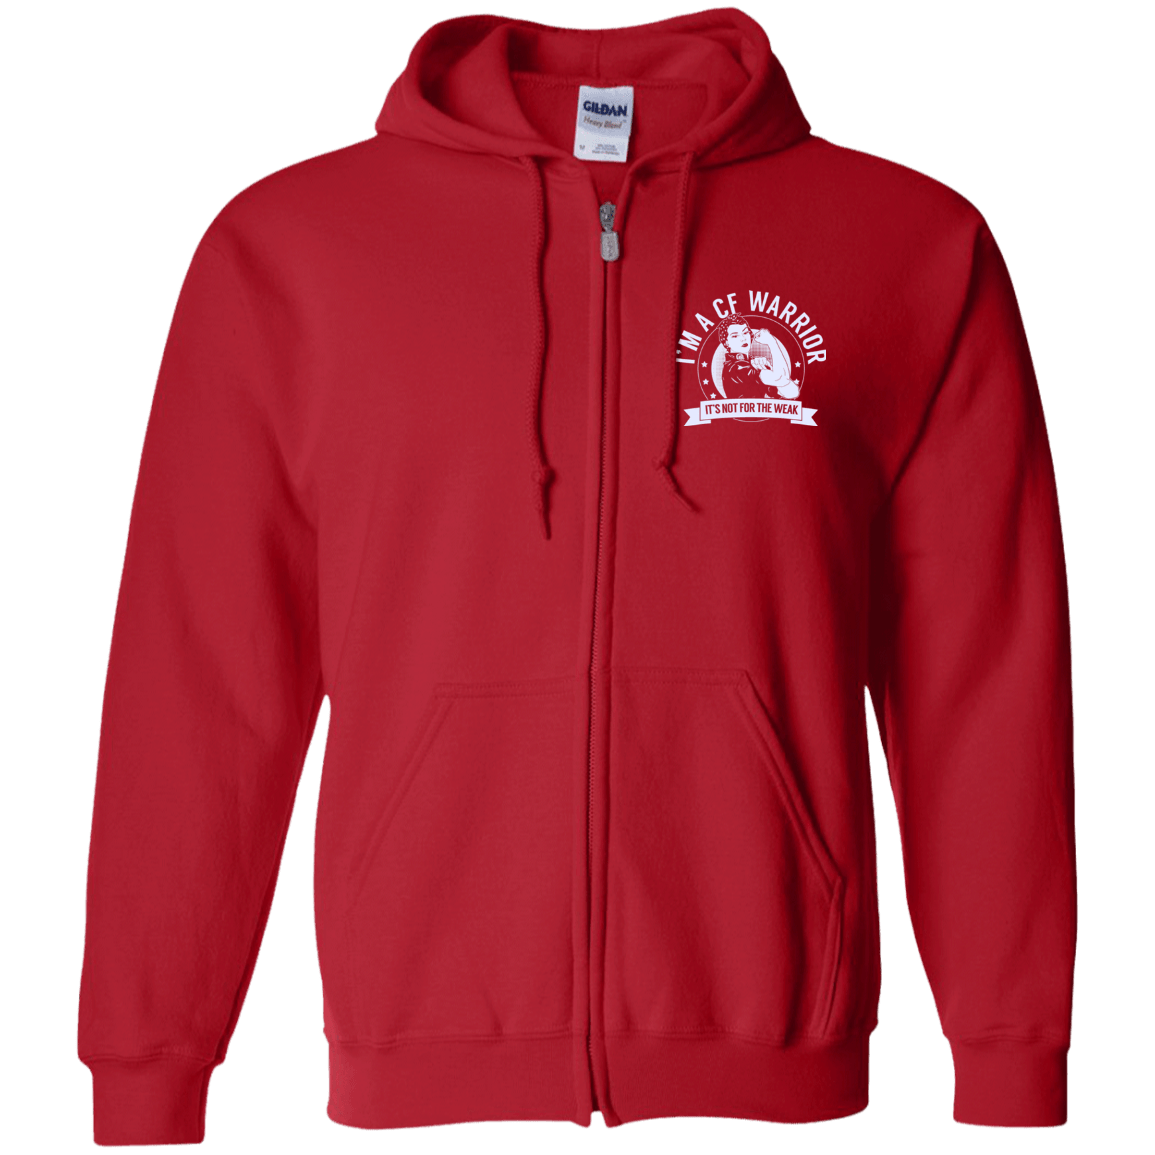 Cystic Fibrosis - CF Warrior NFTW Zip Up Hooded Sweatshirt - The Unchargeables